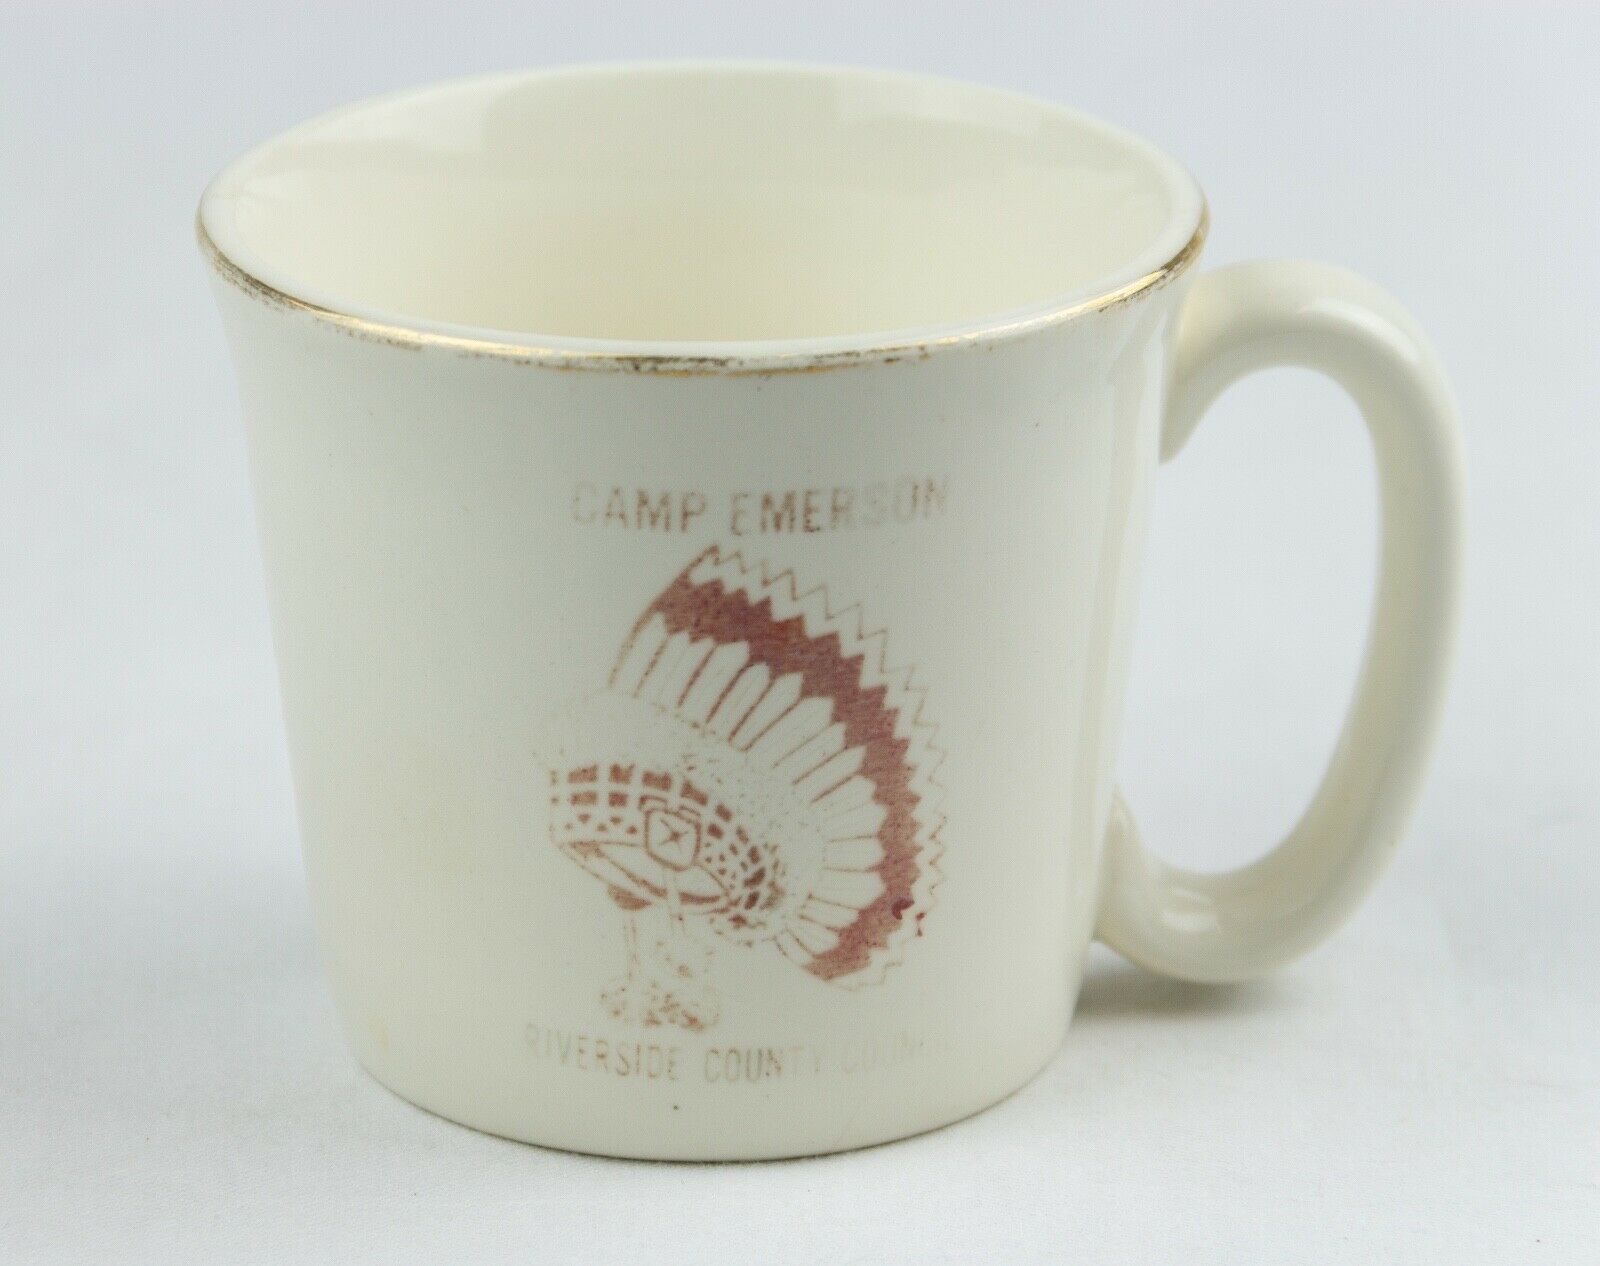 Vintage Camp Emerson Riverside County California Council Coffee Cup Mug